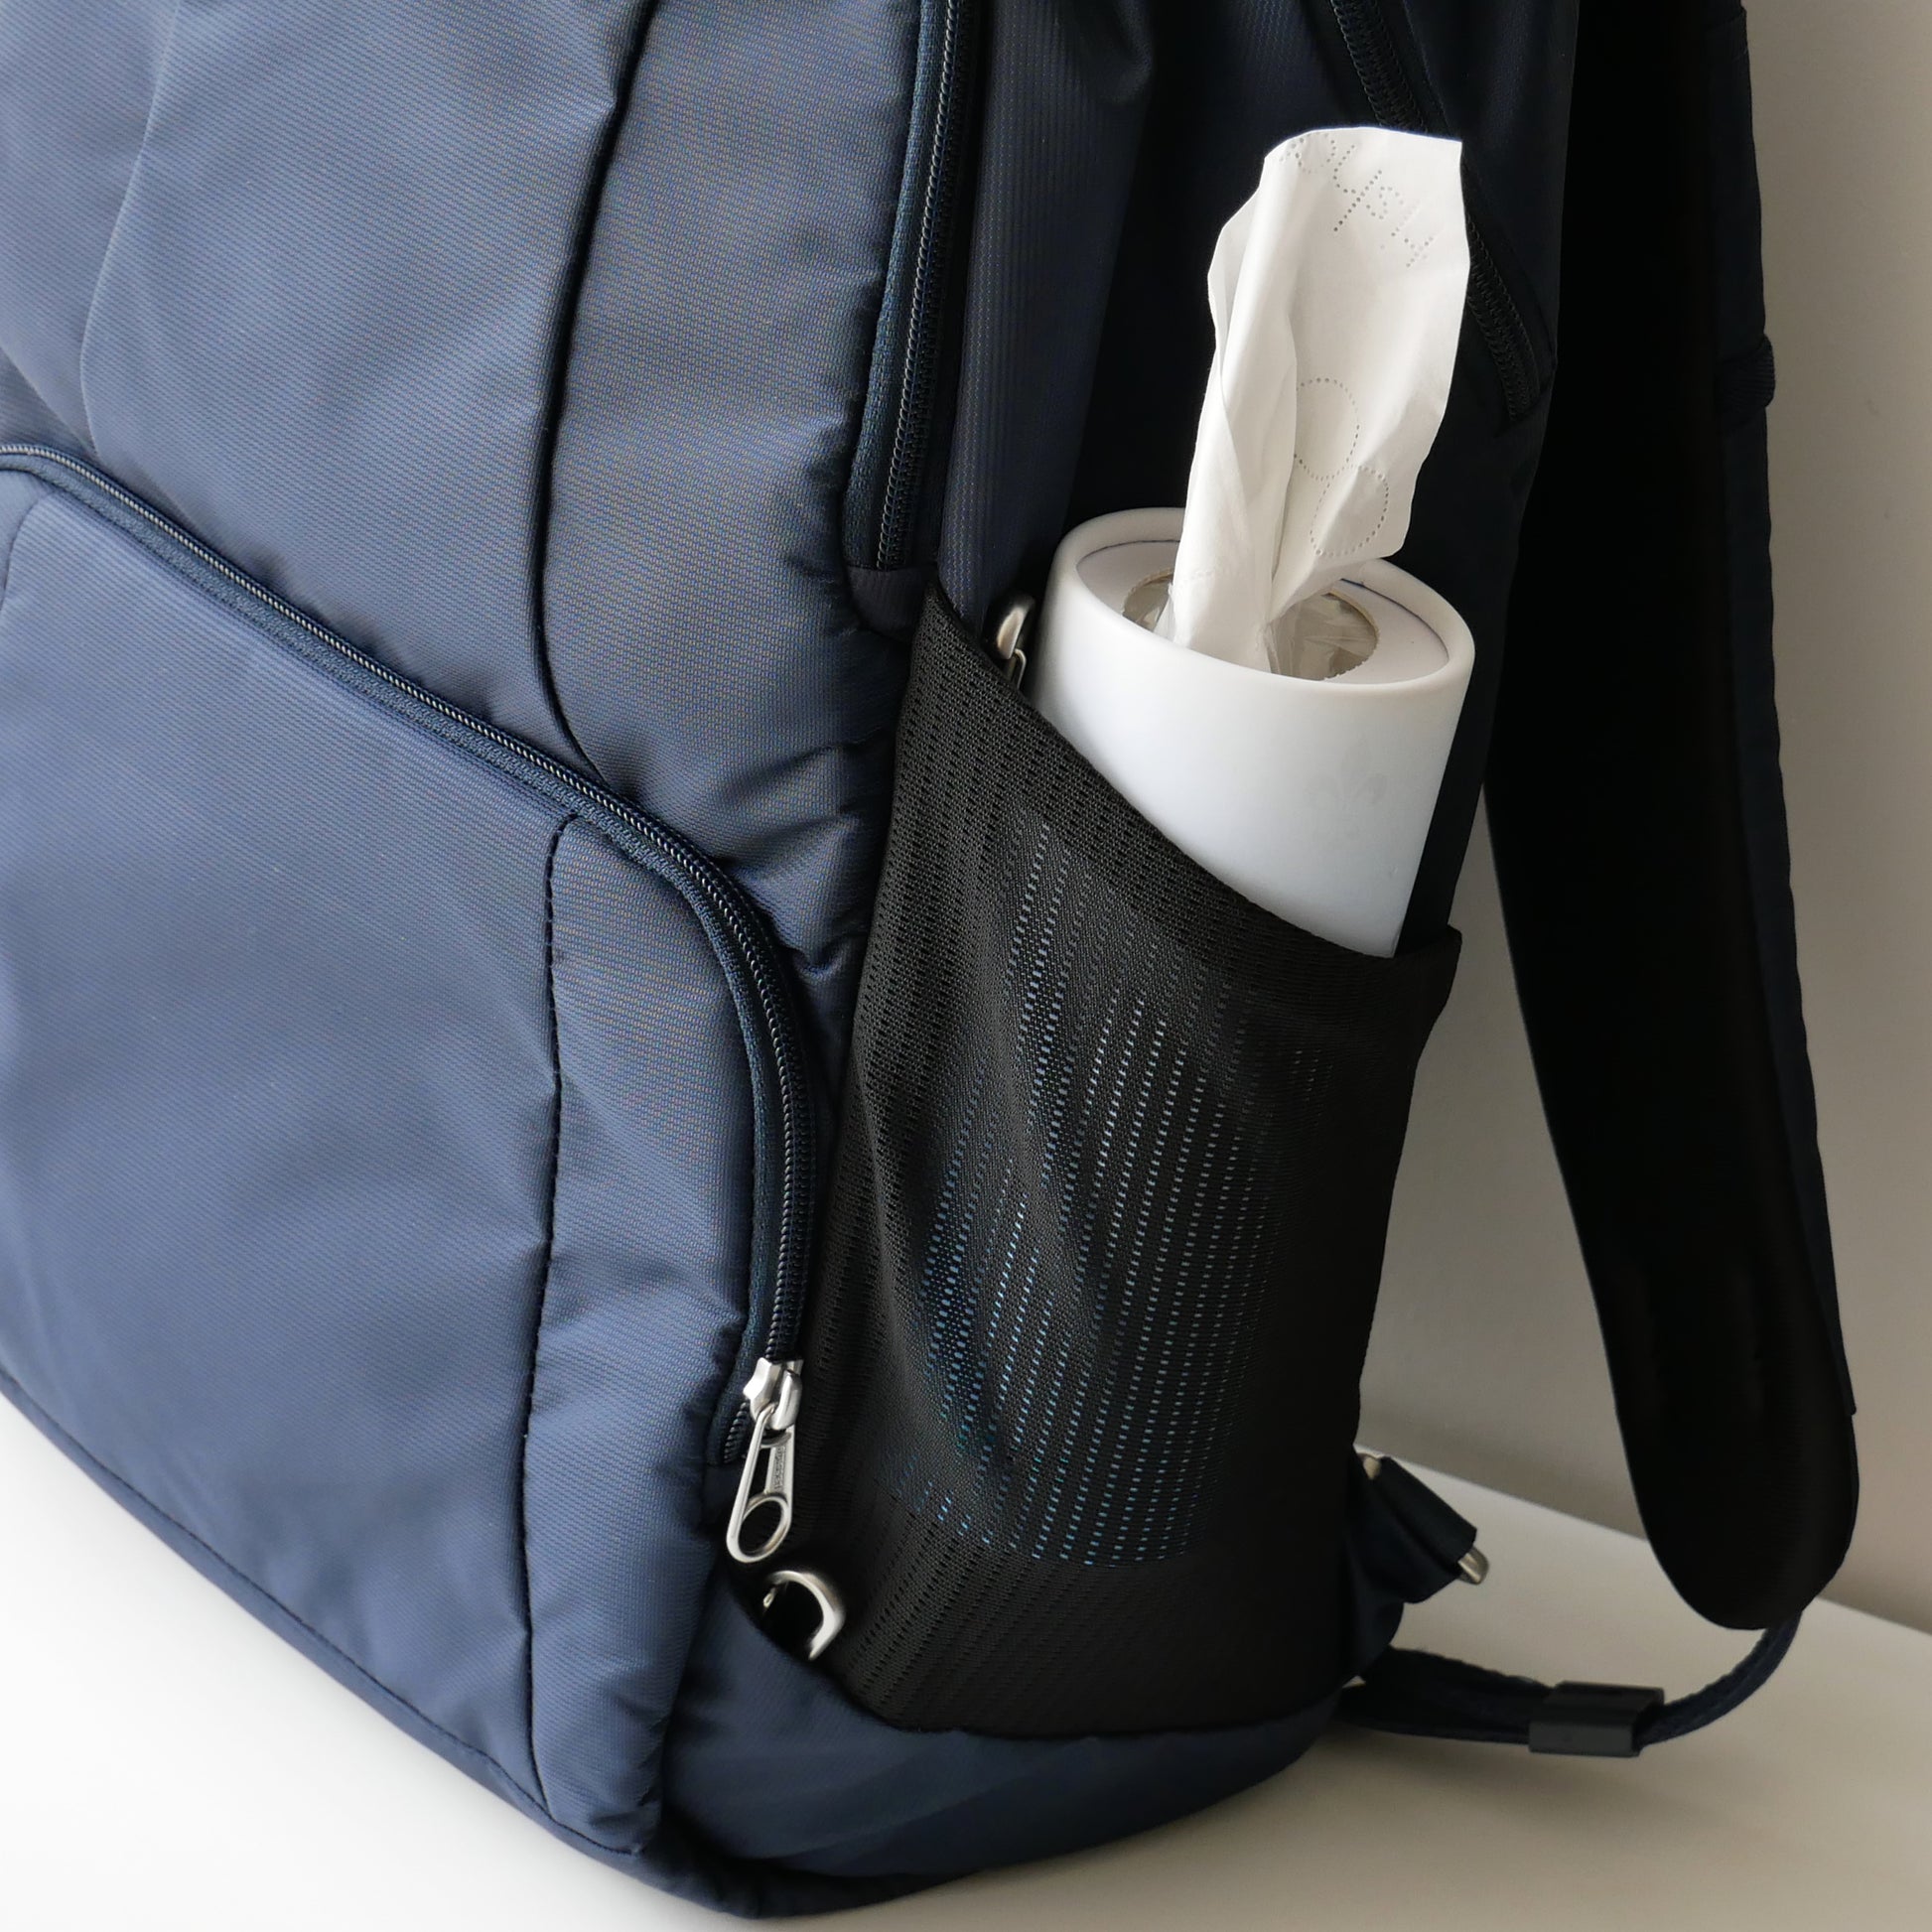 tishoo Luxury Tissues Blue/Ice design in backpack